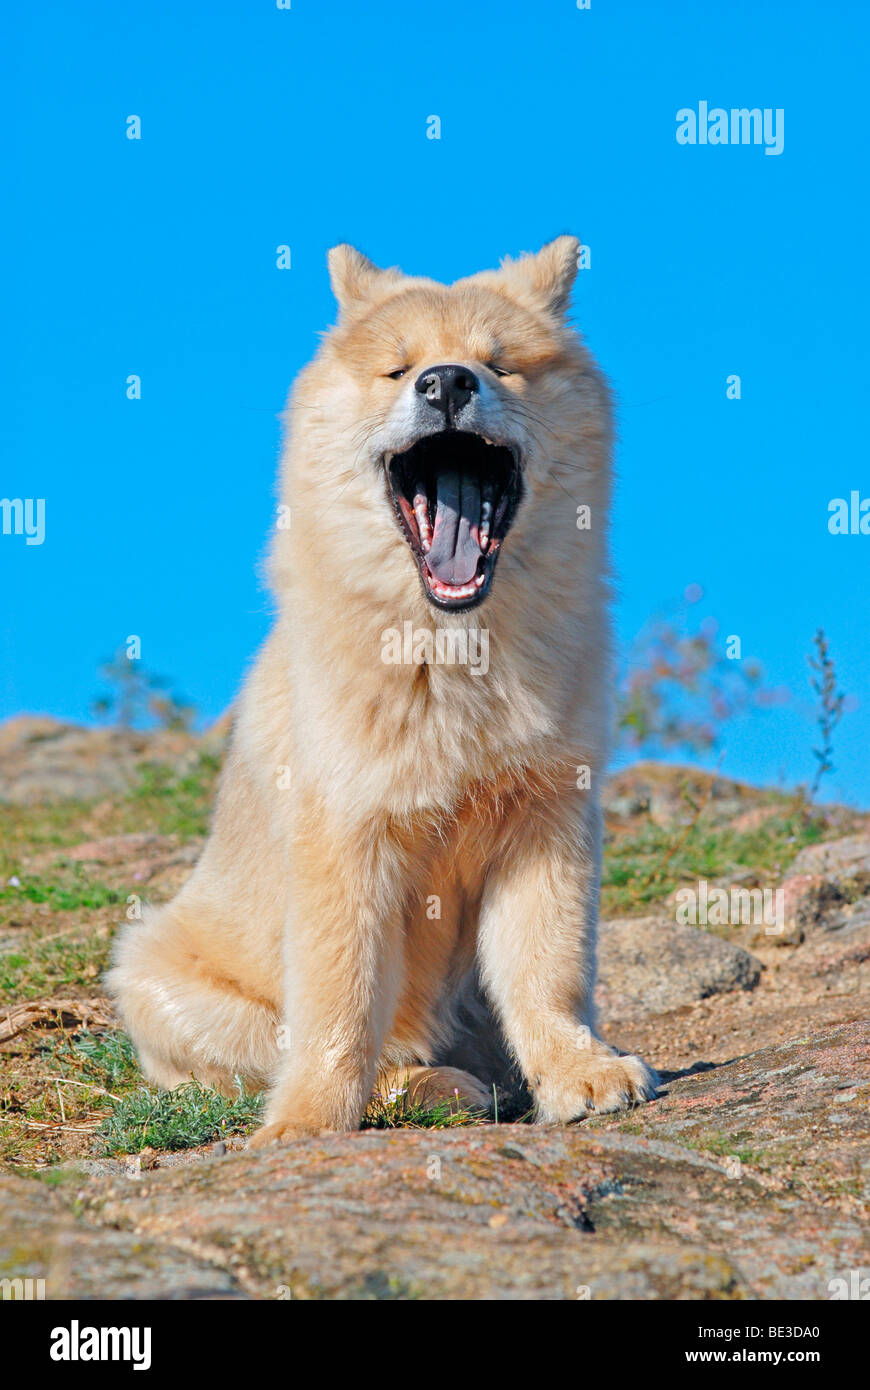 Eurasier sitting on rocks, yawning Stock Photo